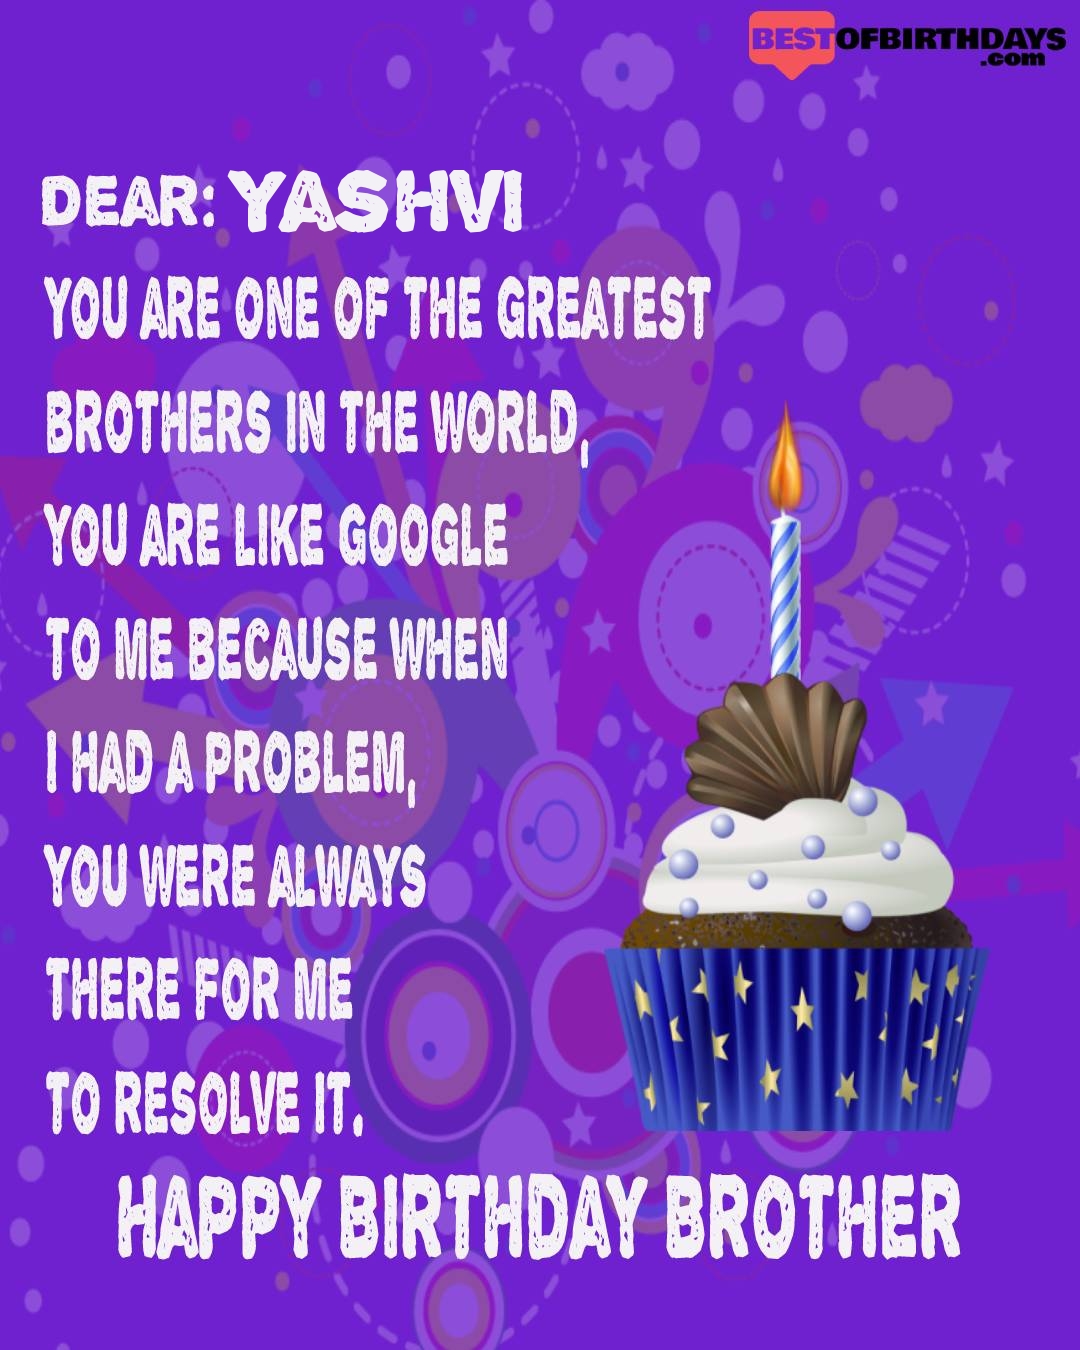 Happy birthday yashvi bhai brother bro